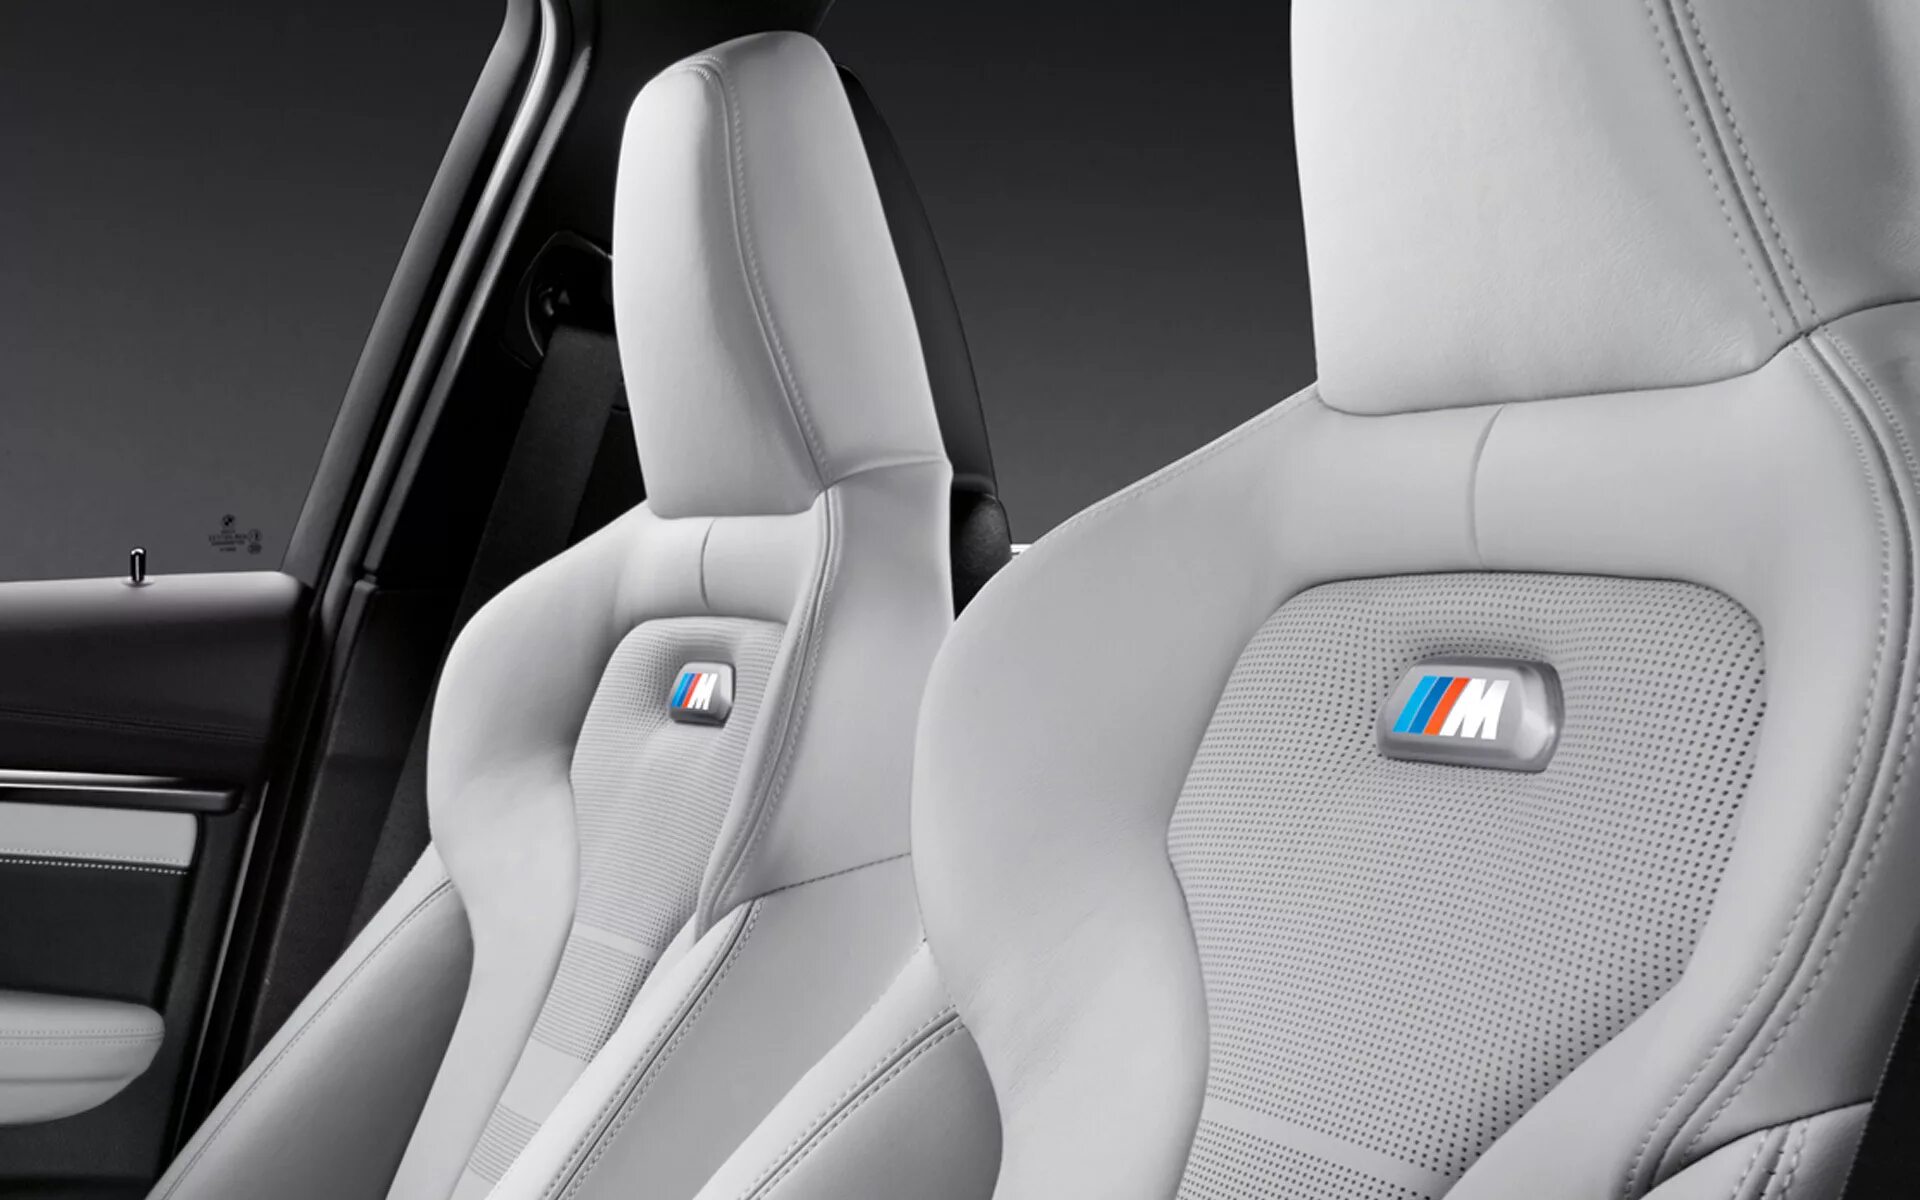 Кресло bmw m5. BMW m3 Seats. Сиденья BMW f80. BMW m3 кресла. Сиденья BMW m3 f80.